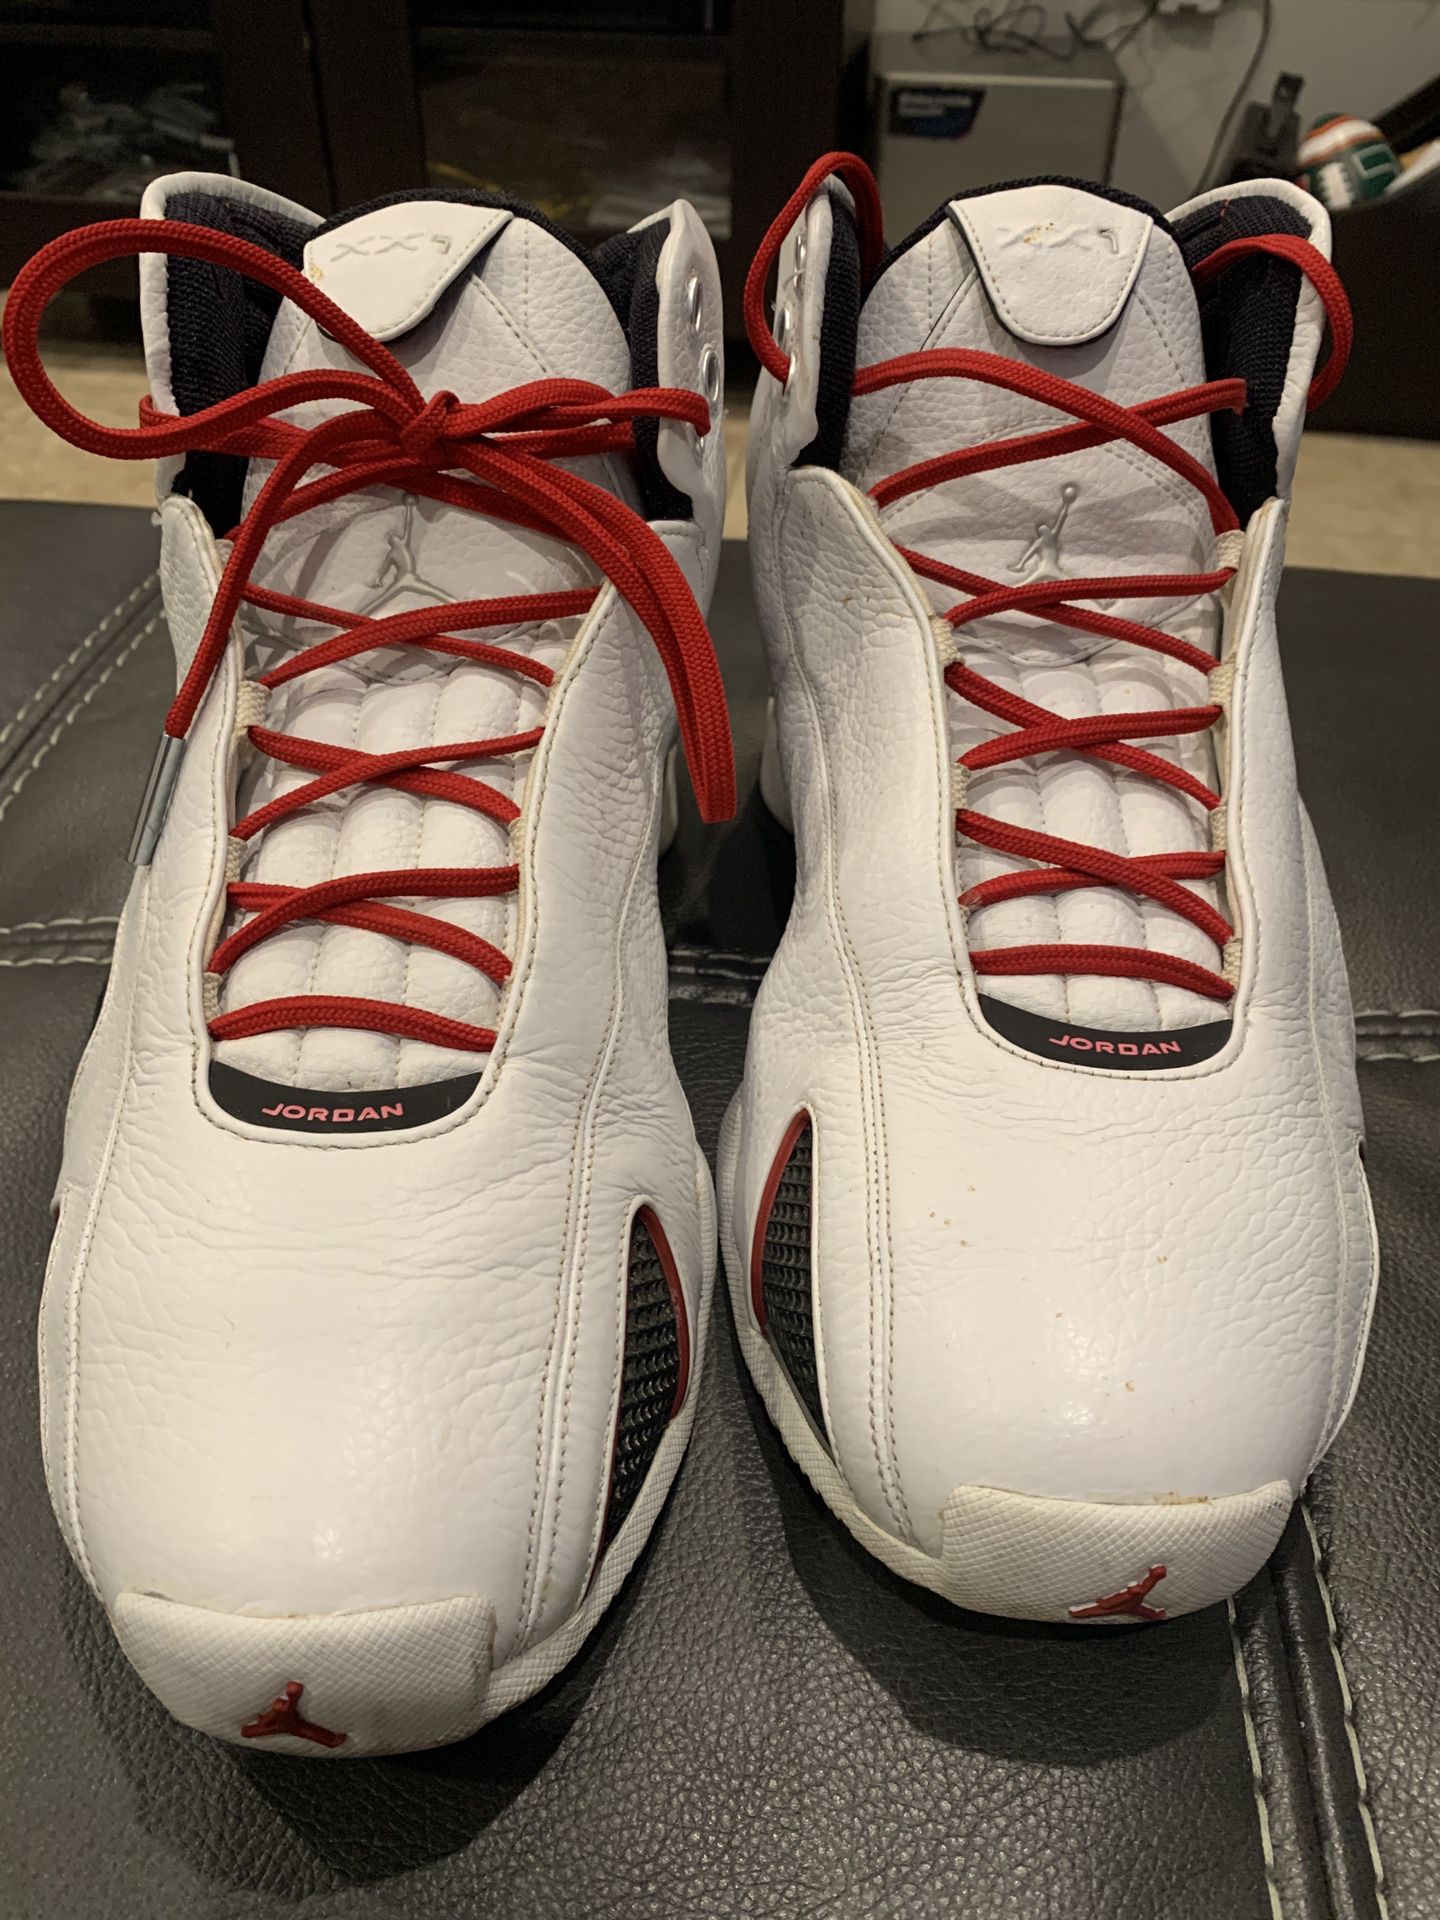 Jordan XXI size 13 red, white, black (used)